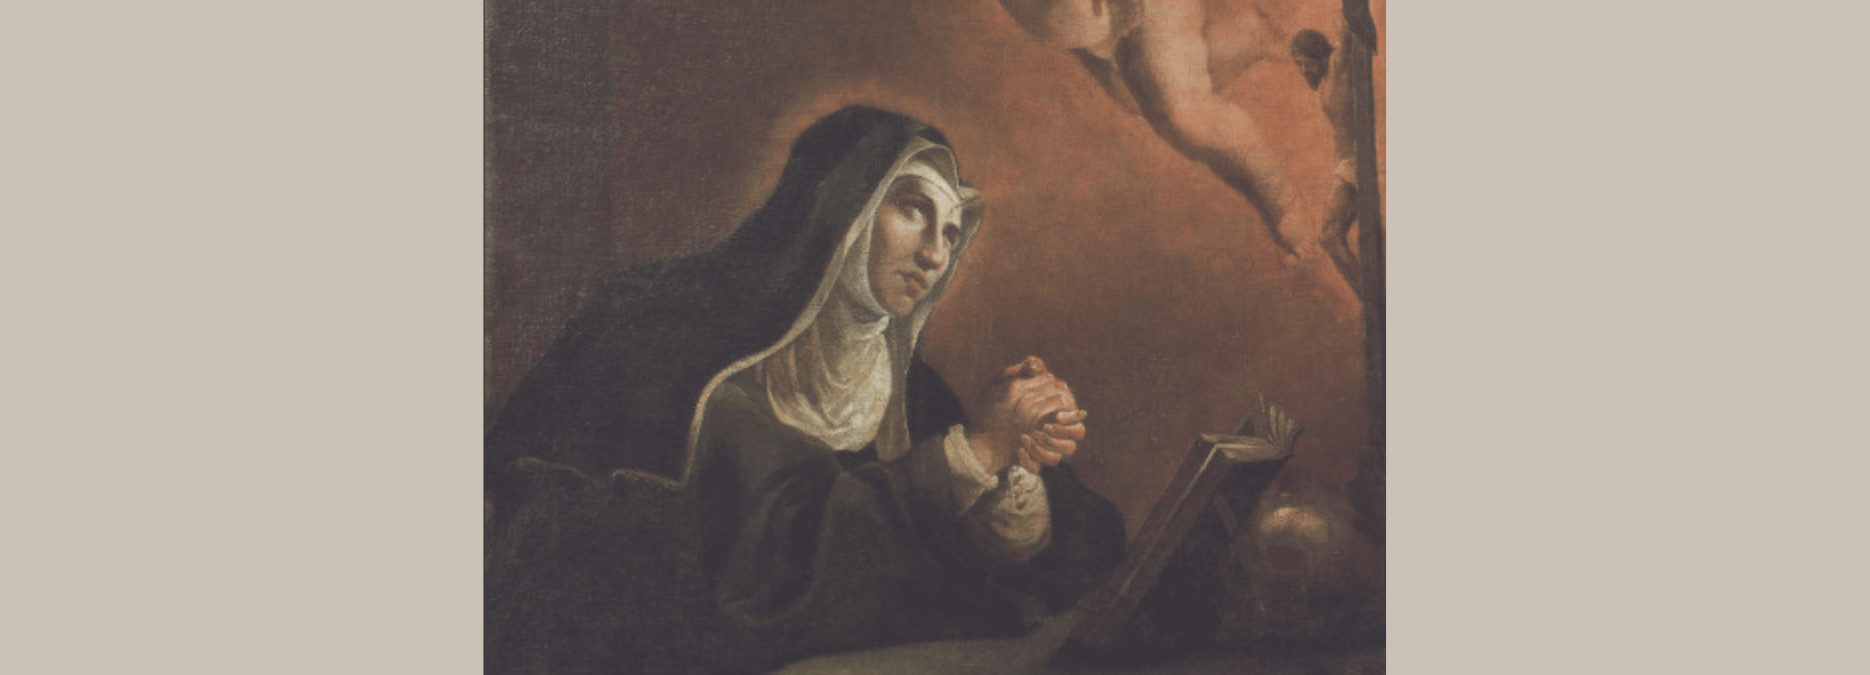 Sainte Rita, dernier espoir des causes perdues, de Marie Allain